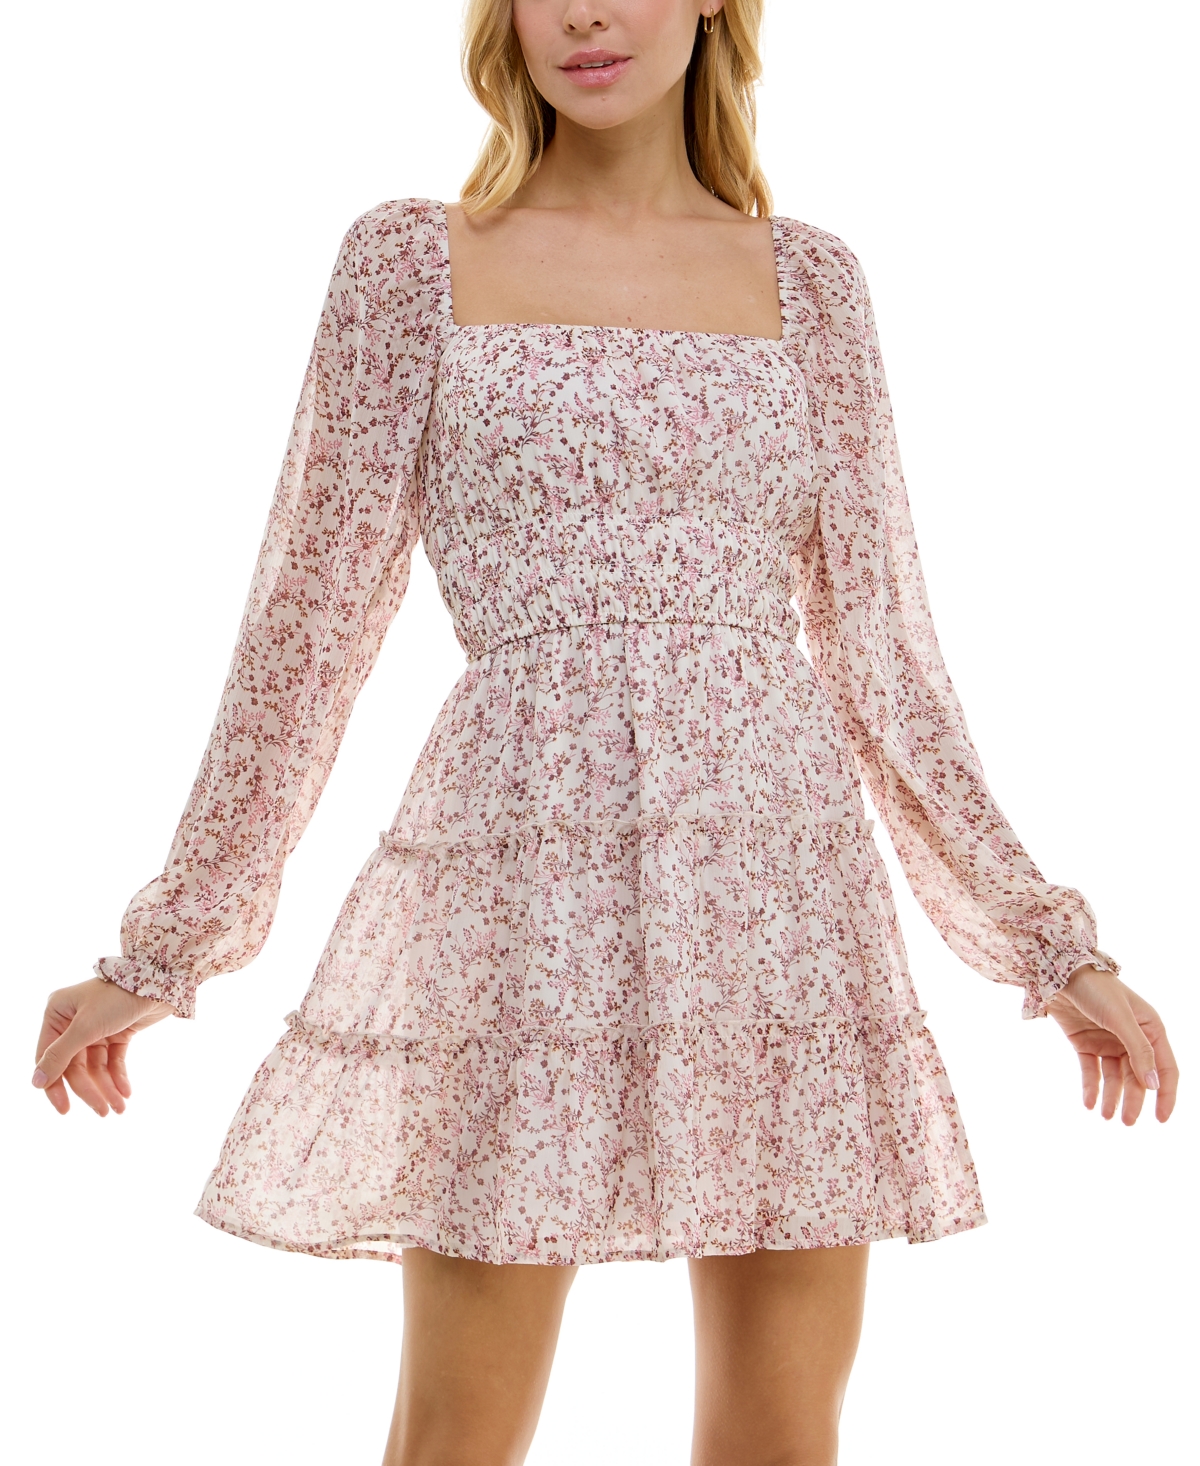 Juniors' Emma Printed Long-Sleeve Dress - Pink/Ivory